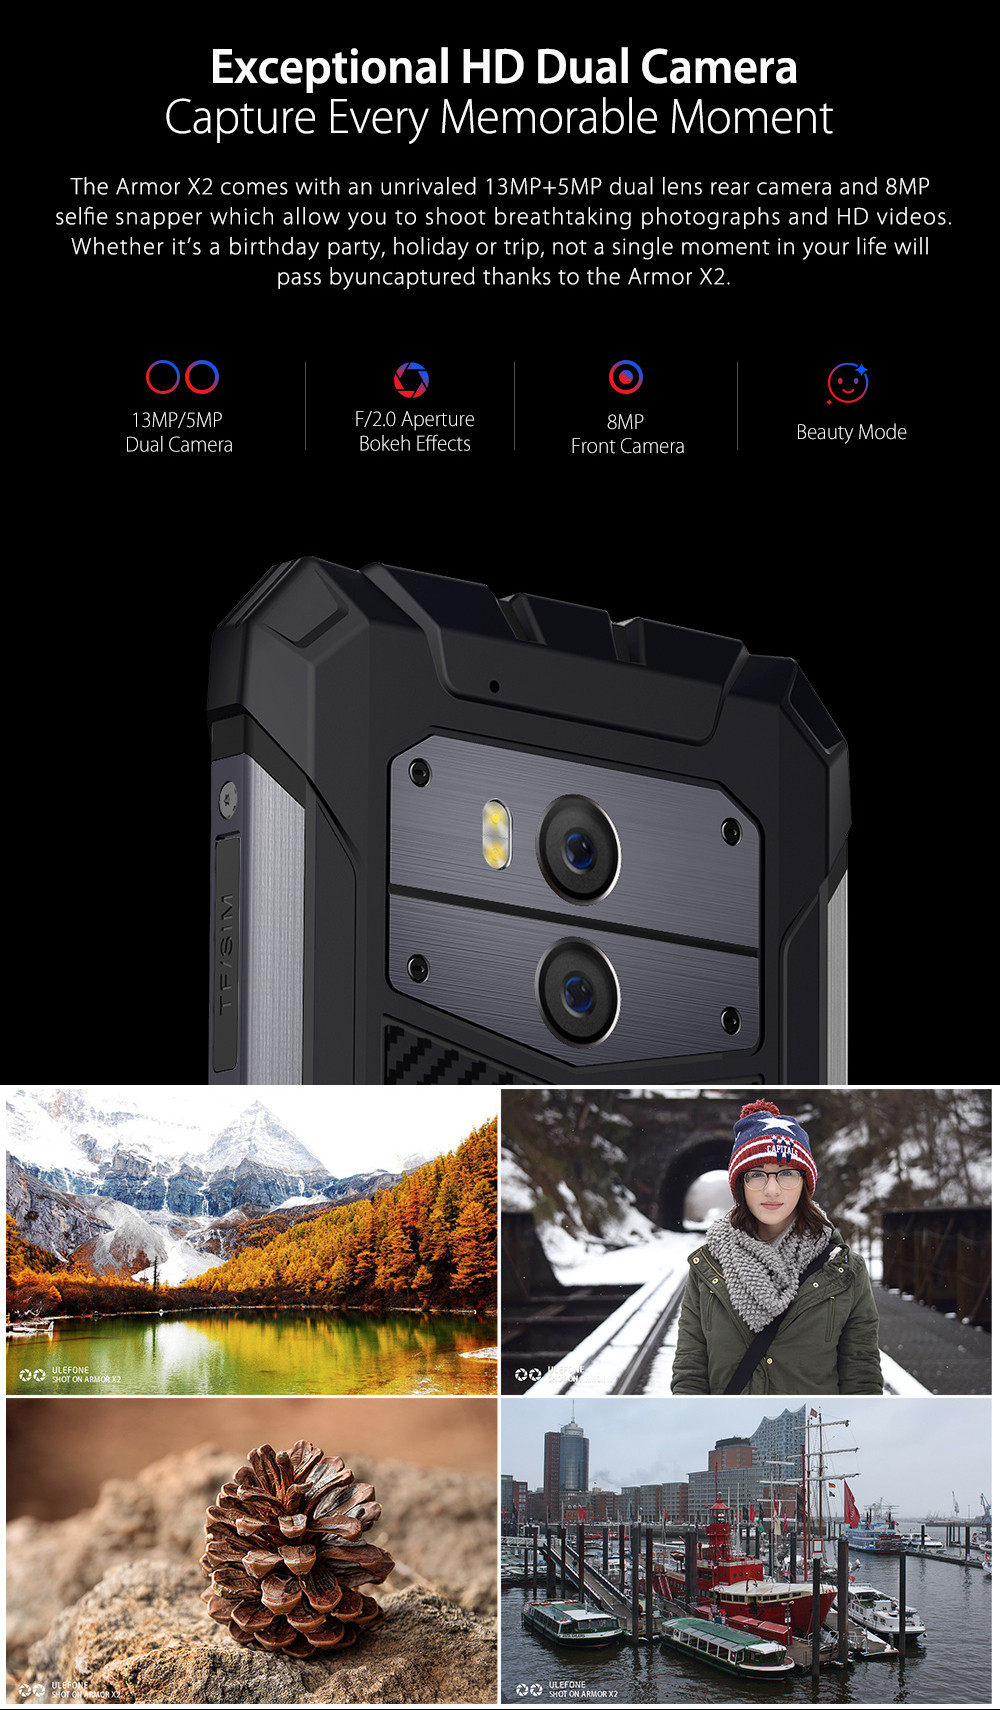 Ulefone-Armor-X2-NFC-IP68-Waterproof-55-inch-2GB-16GB-MT6580-Quad-core-3G-Smartphone-1406870